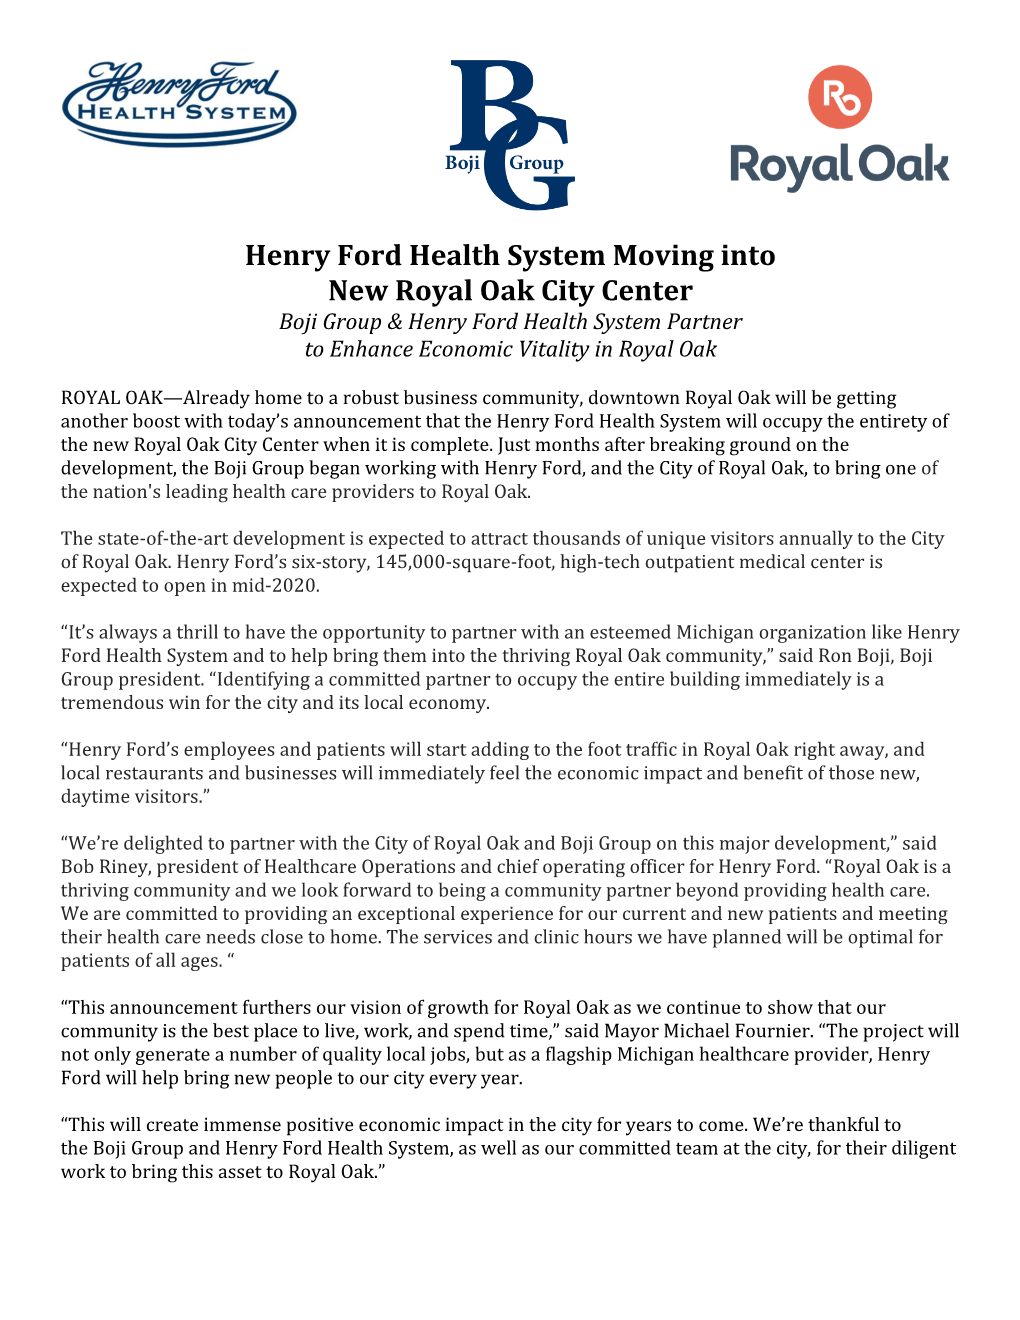 Henry Ford Health System Moving Into New Royal Oak City Center Boji Group & Henry Ford Health System Partner to Enhance Economic Vitality in Royal Oak